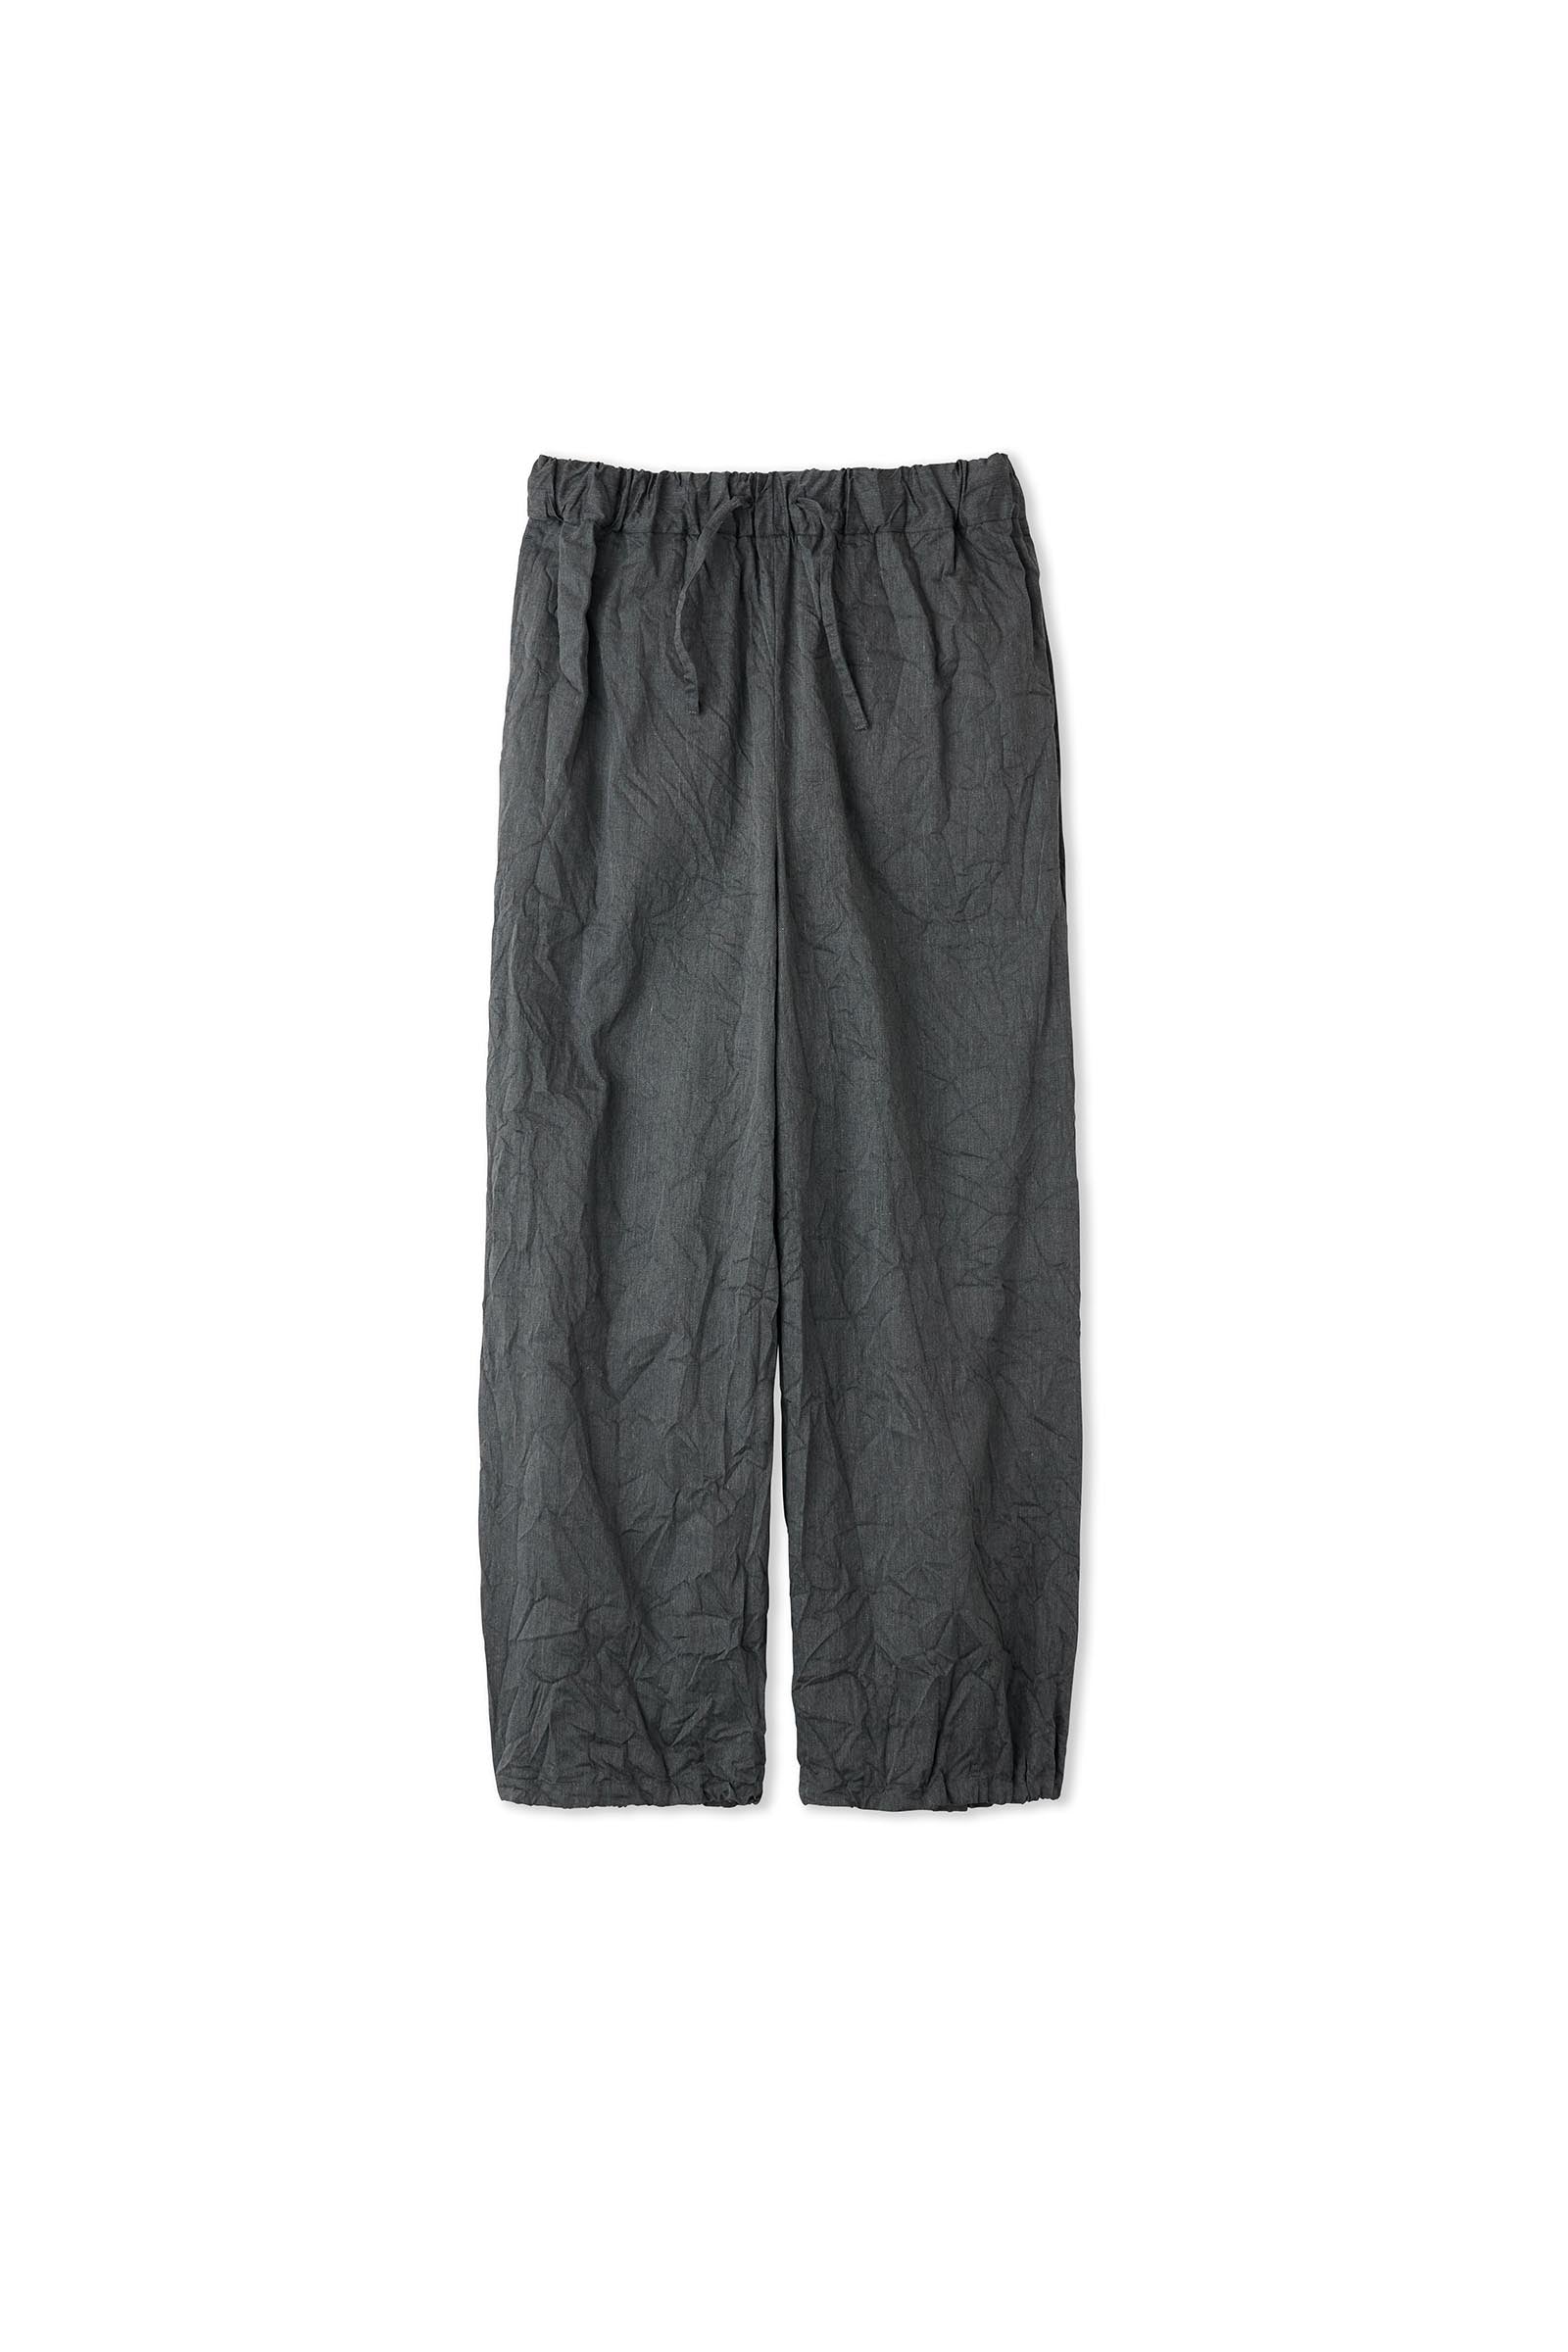 DIGAWEL / Wide lounge pants (crease finish)